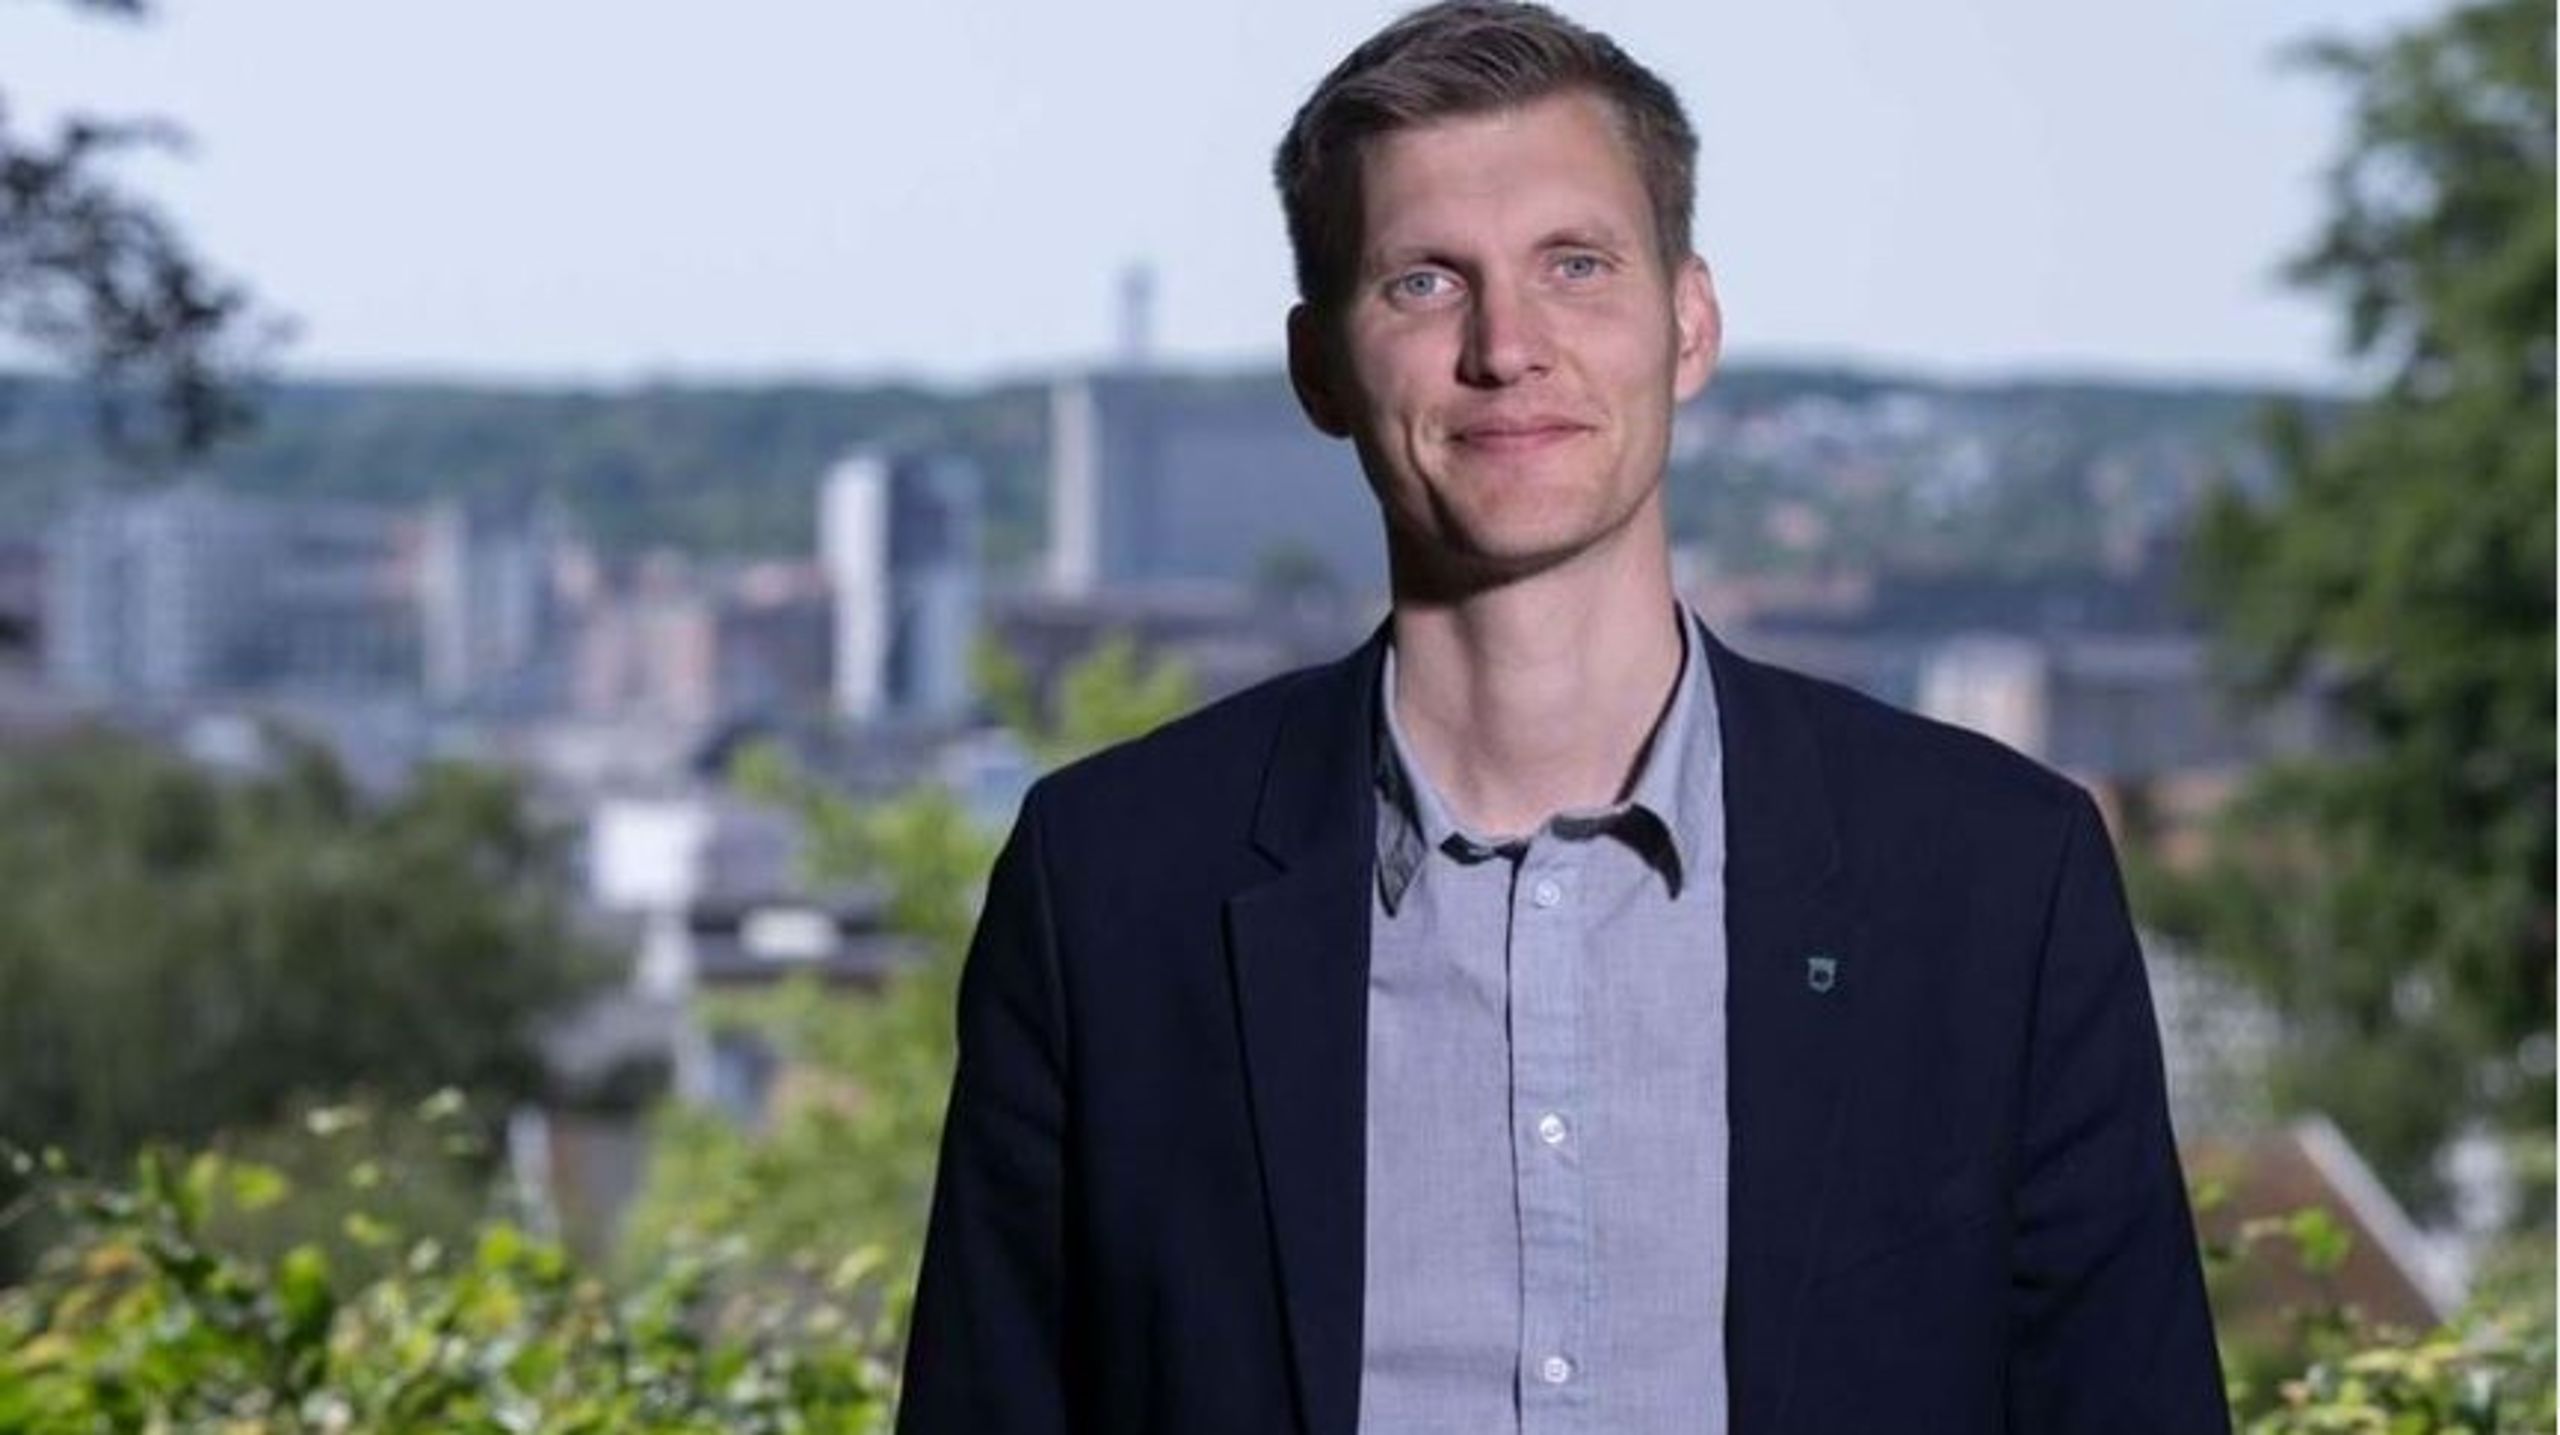 Den nyvalgte borgmester i Aalborg Kommune har landet endnu en toppost.